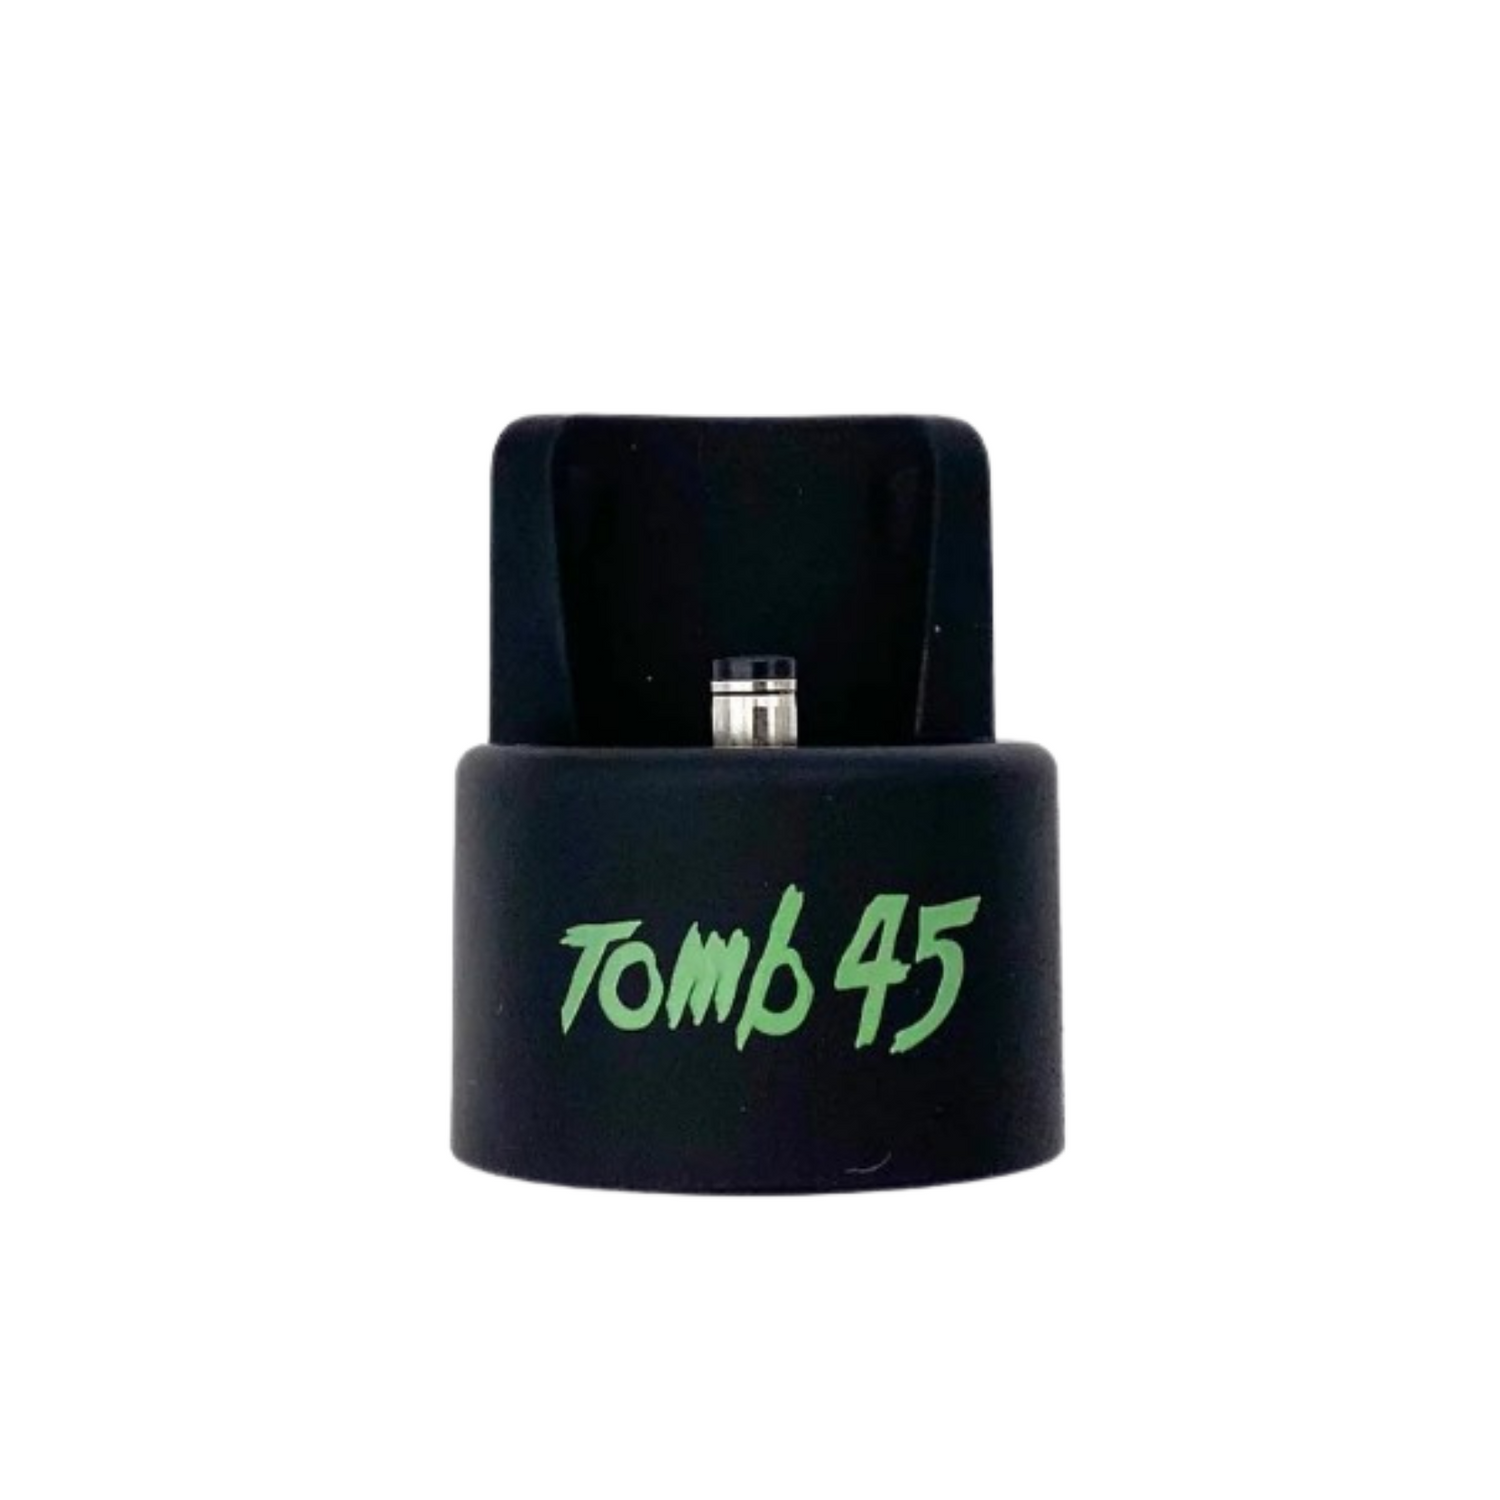 Tomb 45 PowerClip For Andis Slimline Li Wireless